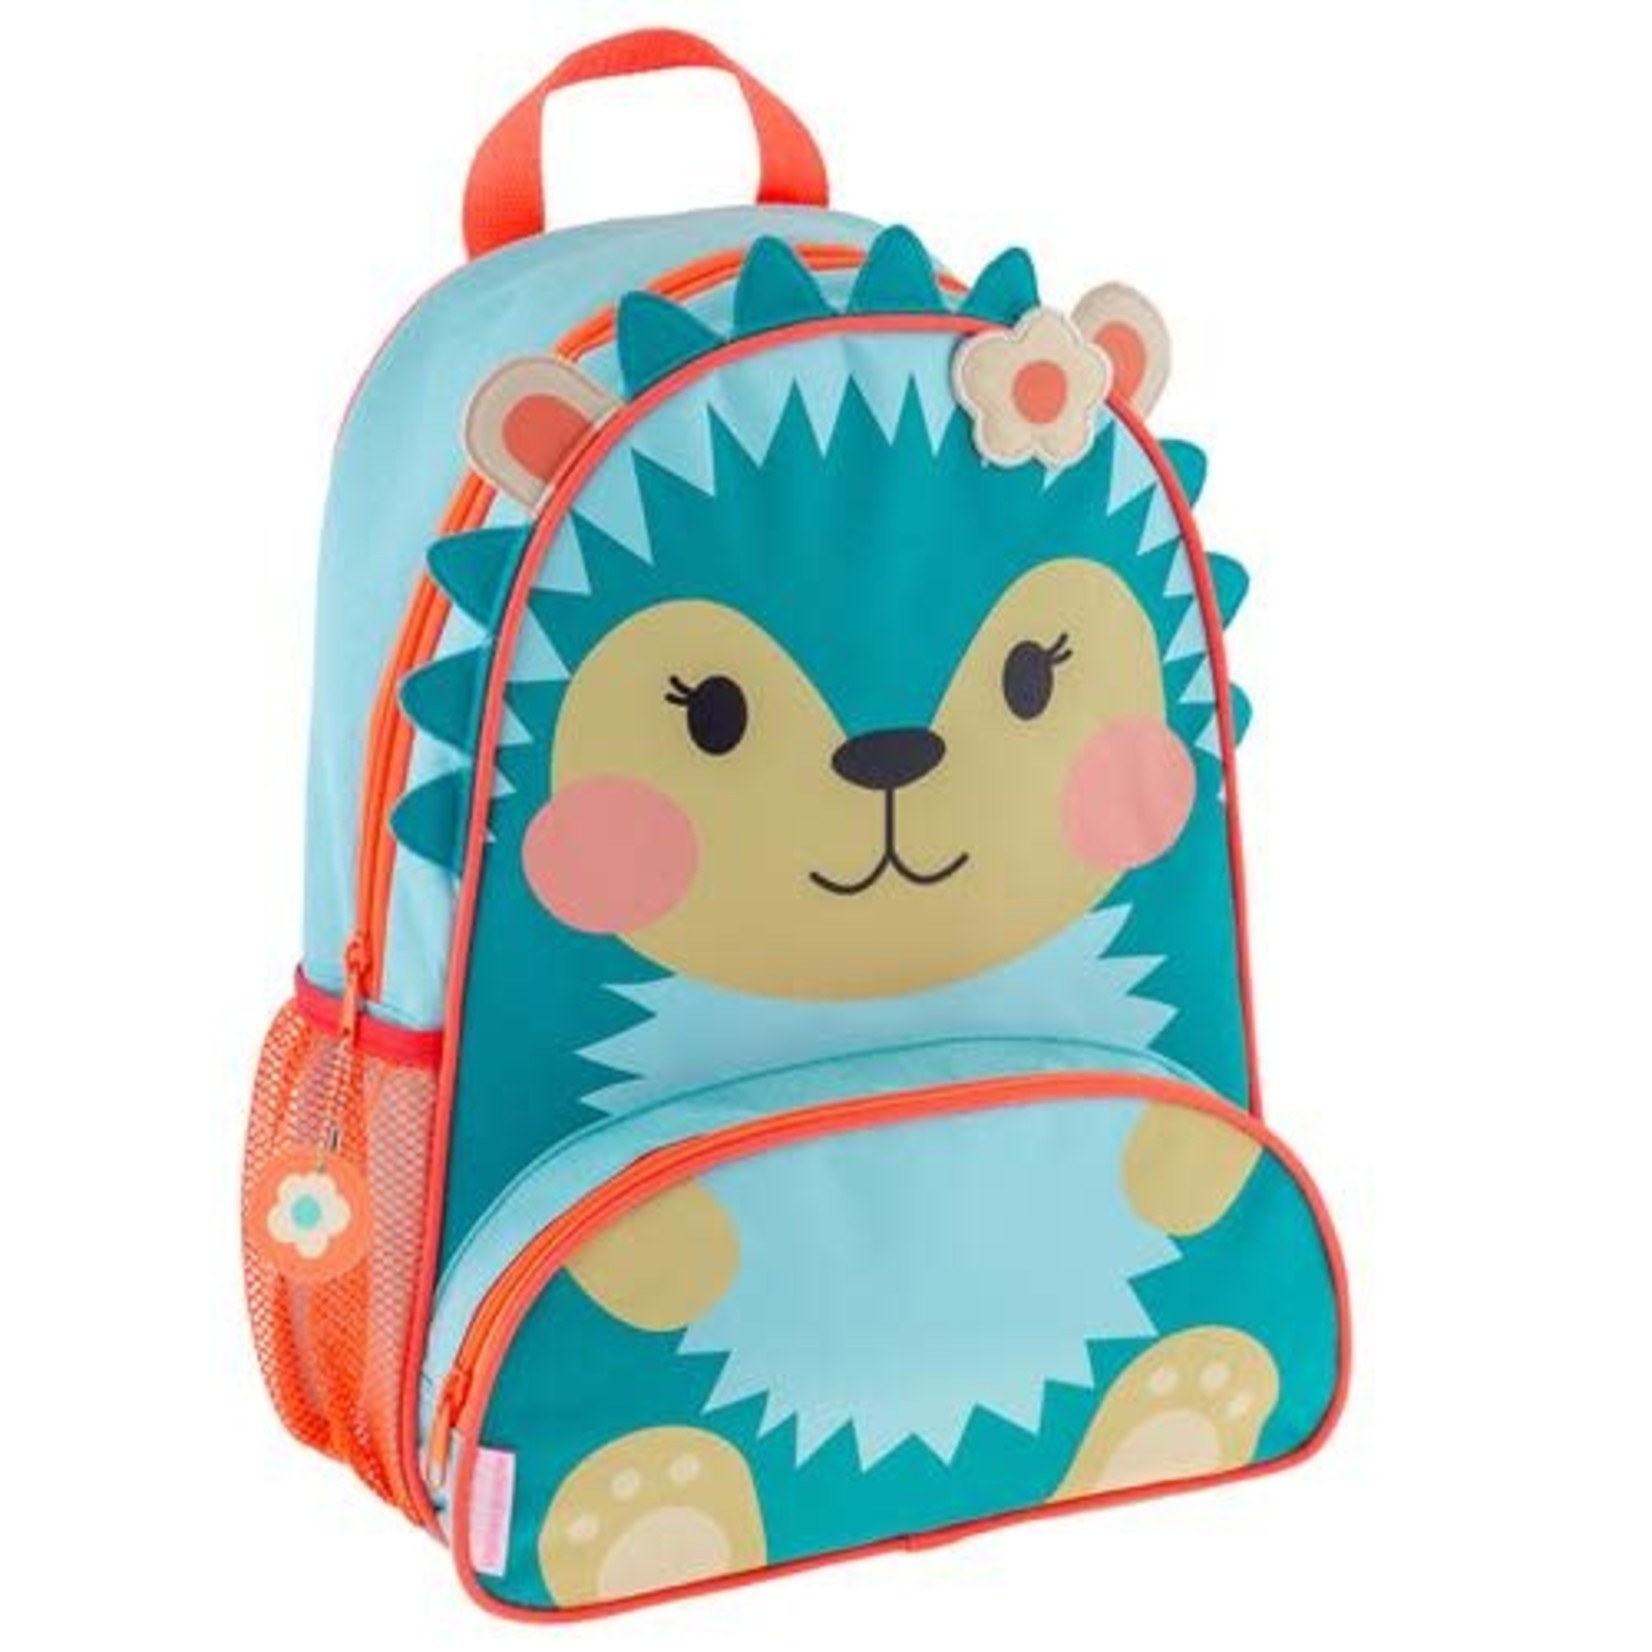 Sidekicks Backpack - Hedgehog